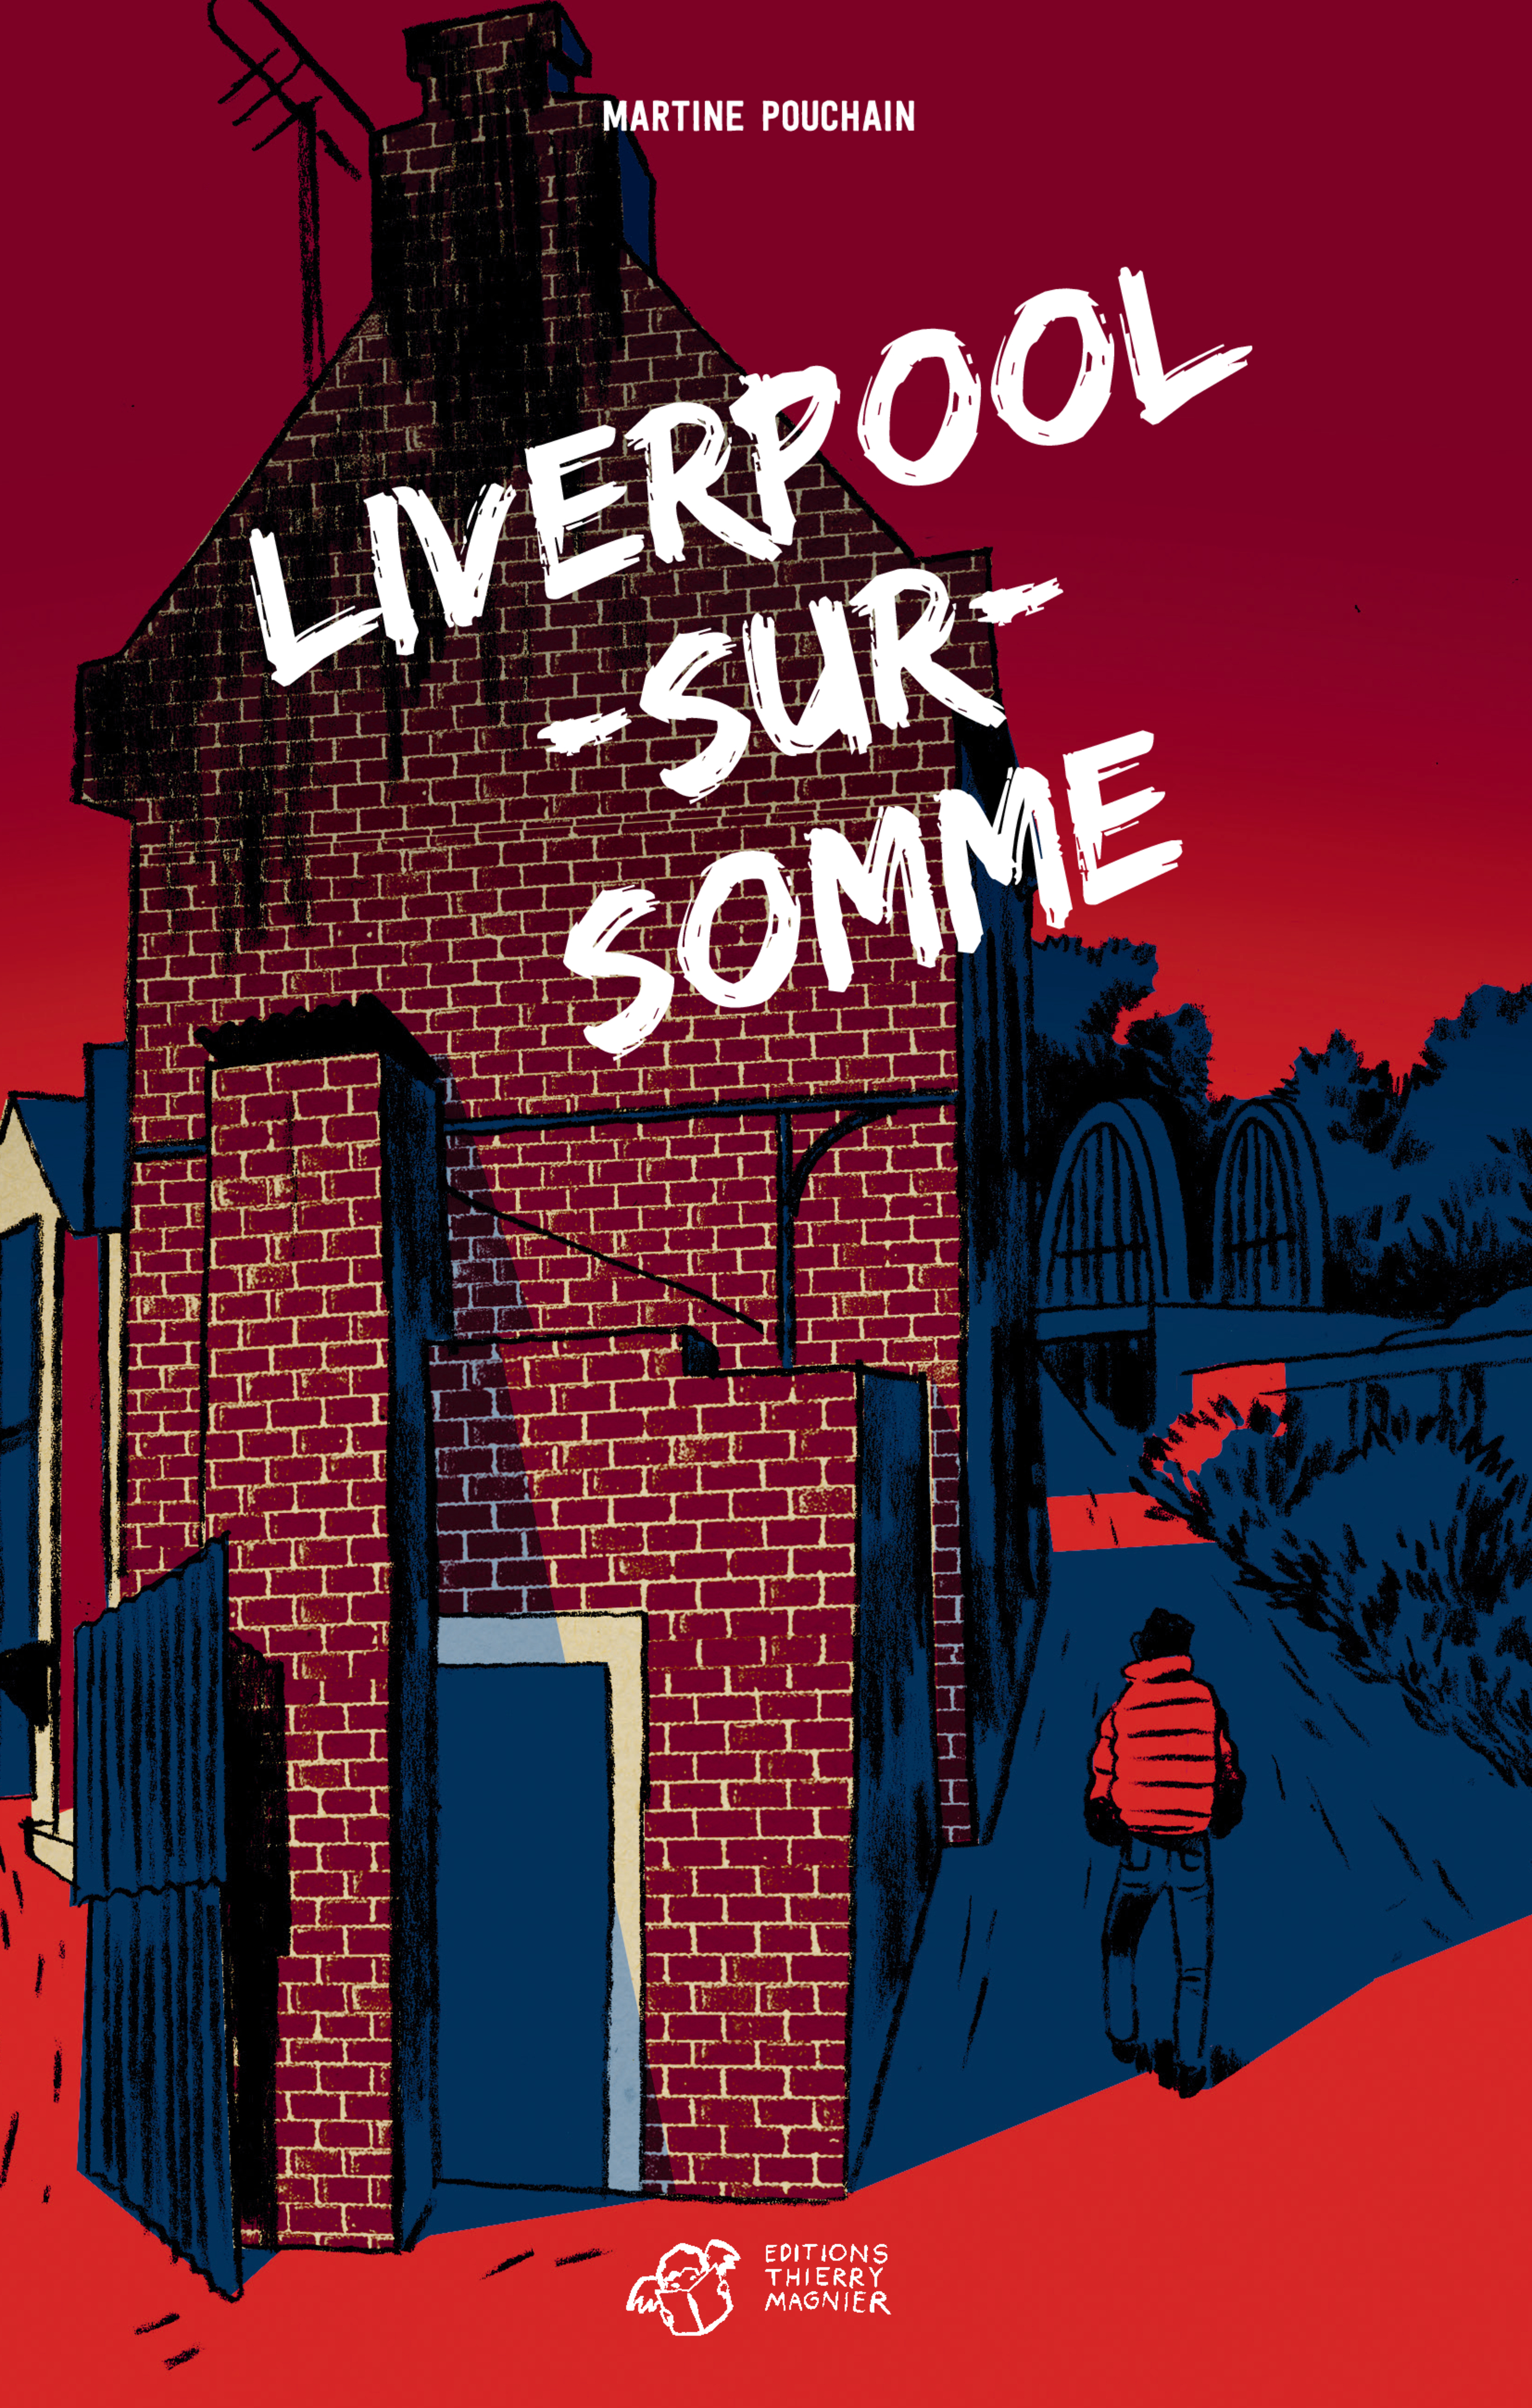 Afficher "Liverpool-sur-Somme"